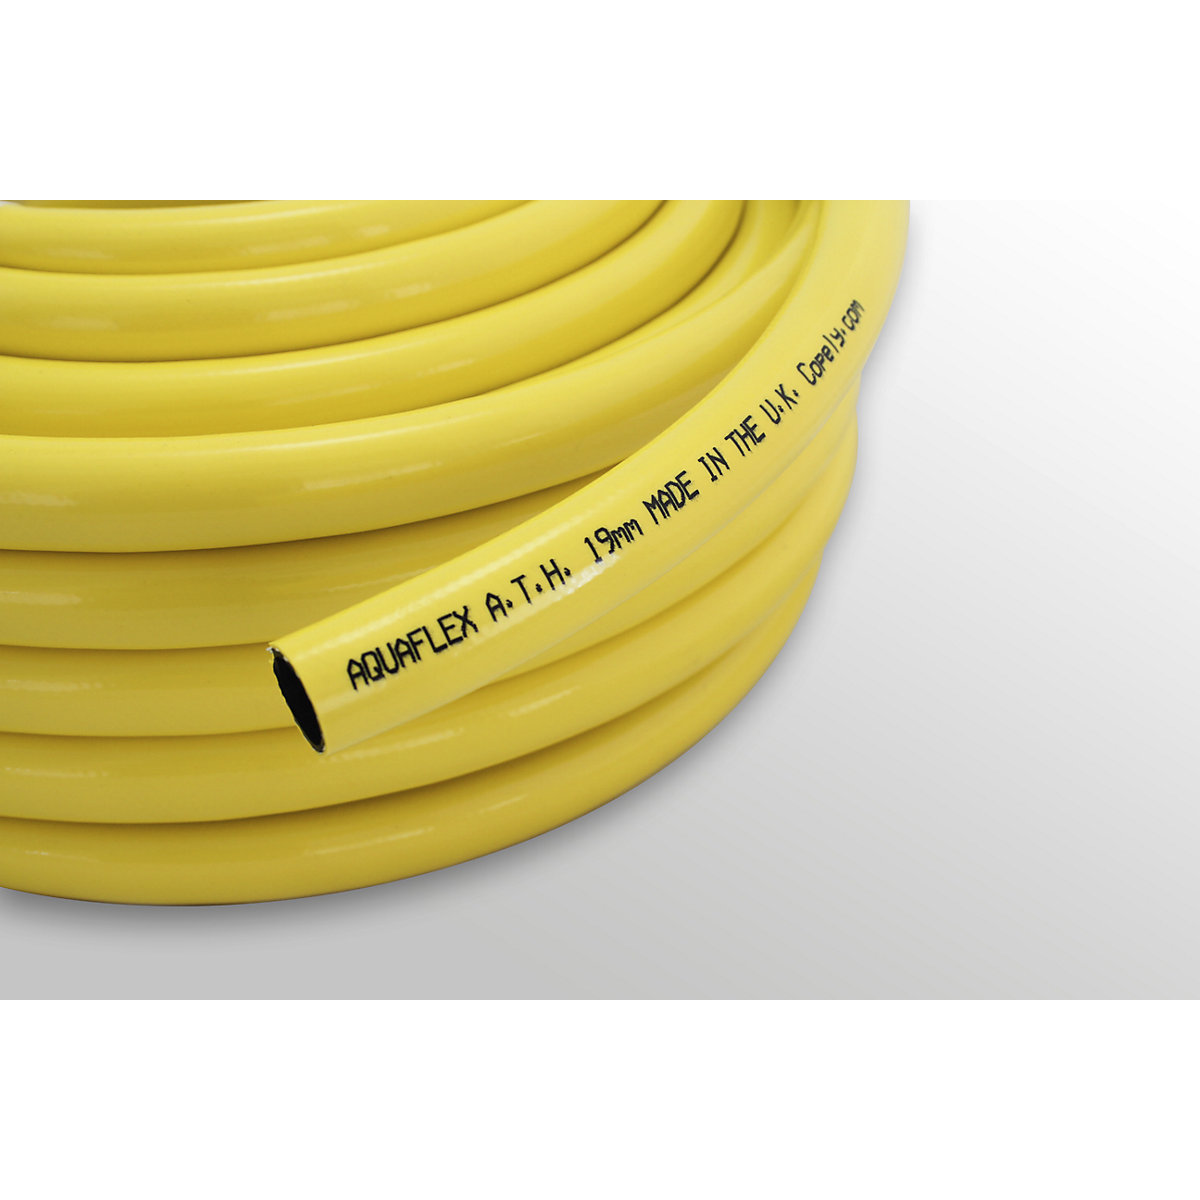 Vertrek naar openbaring dauw Waterslang van PVC, geel: lengte 25 m | VINK LISSE Nederland